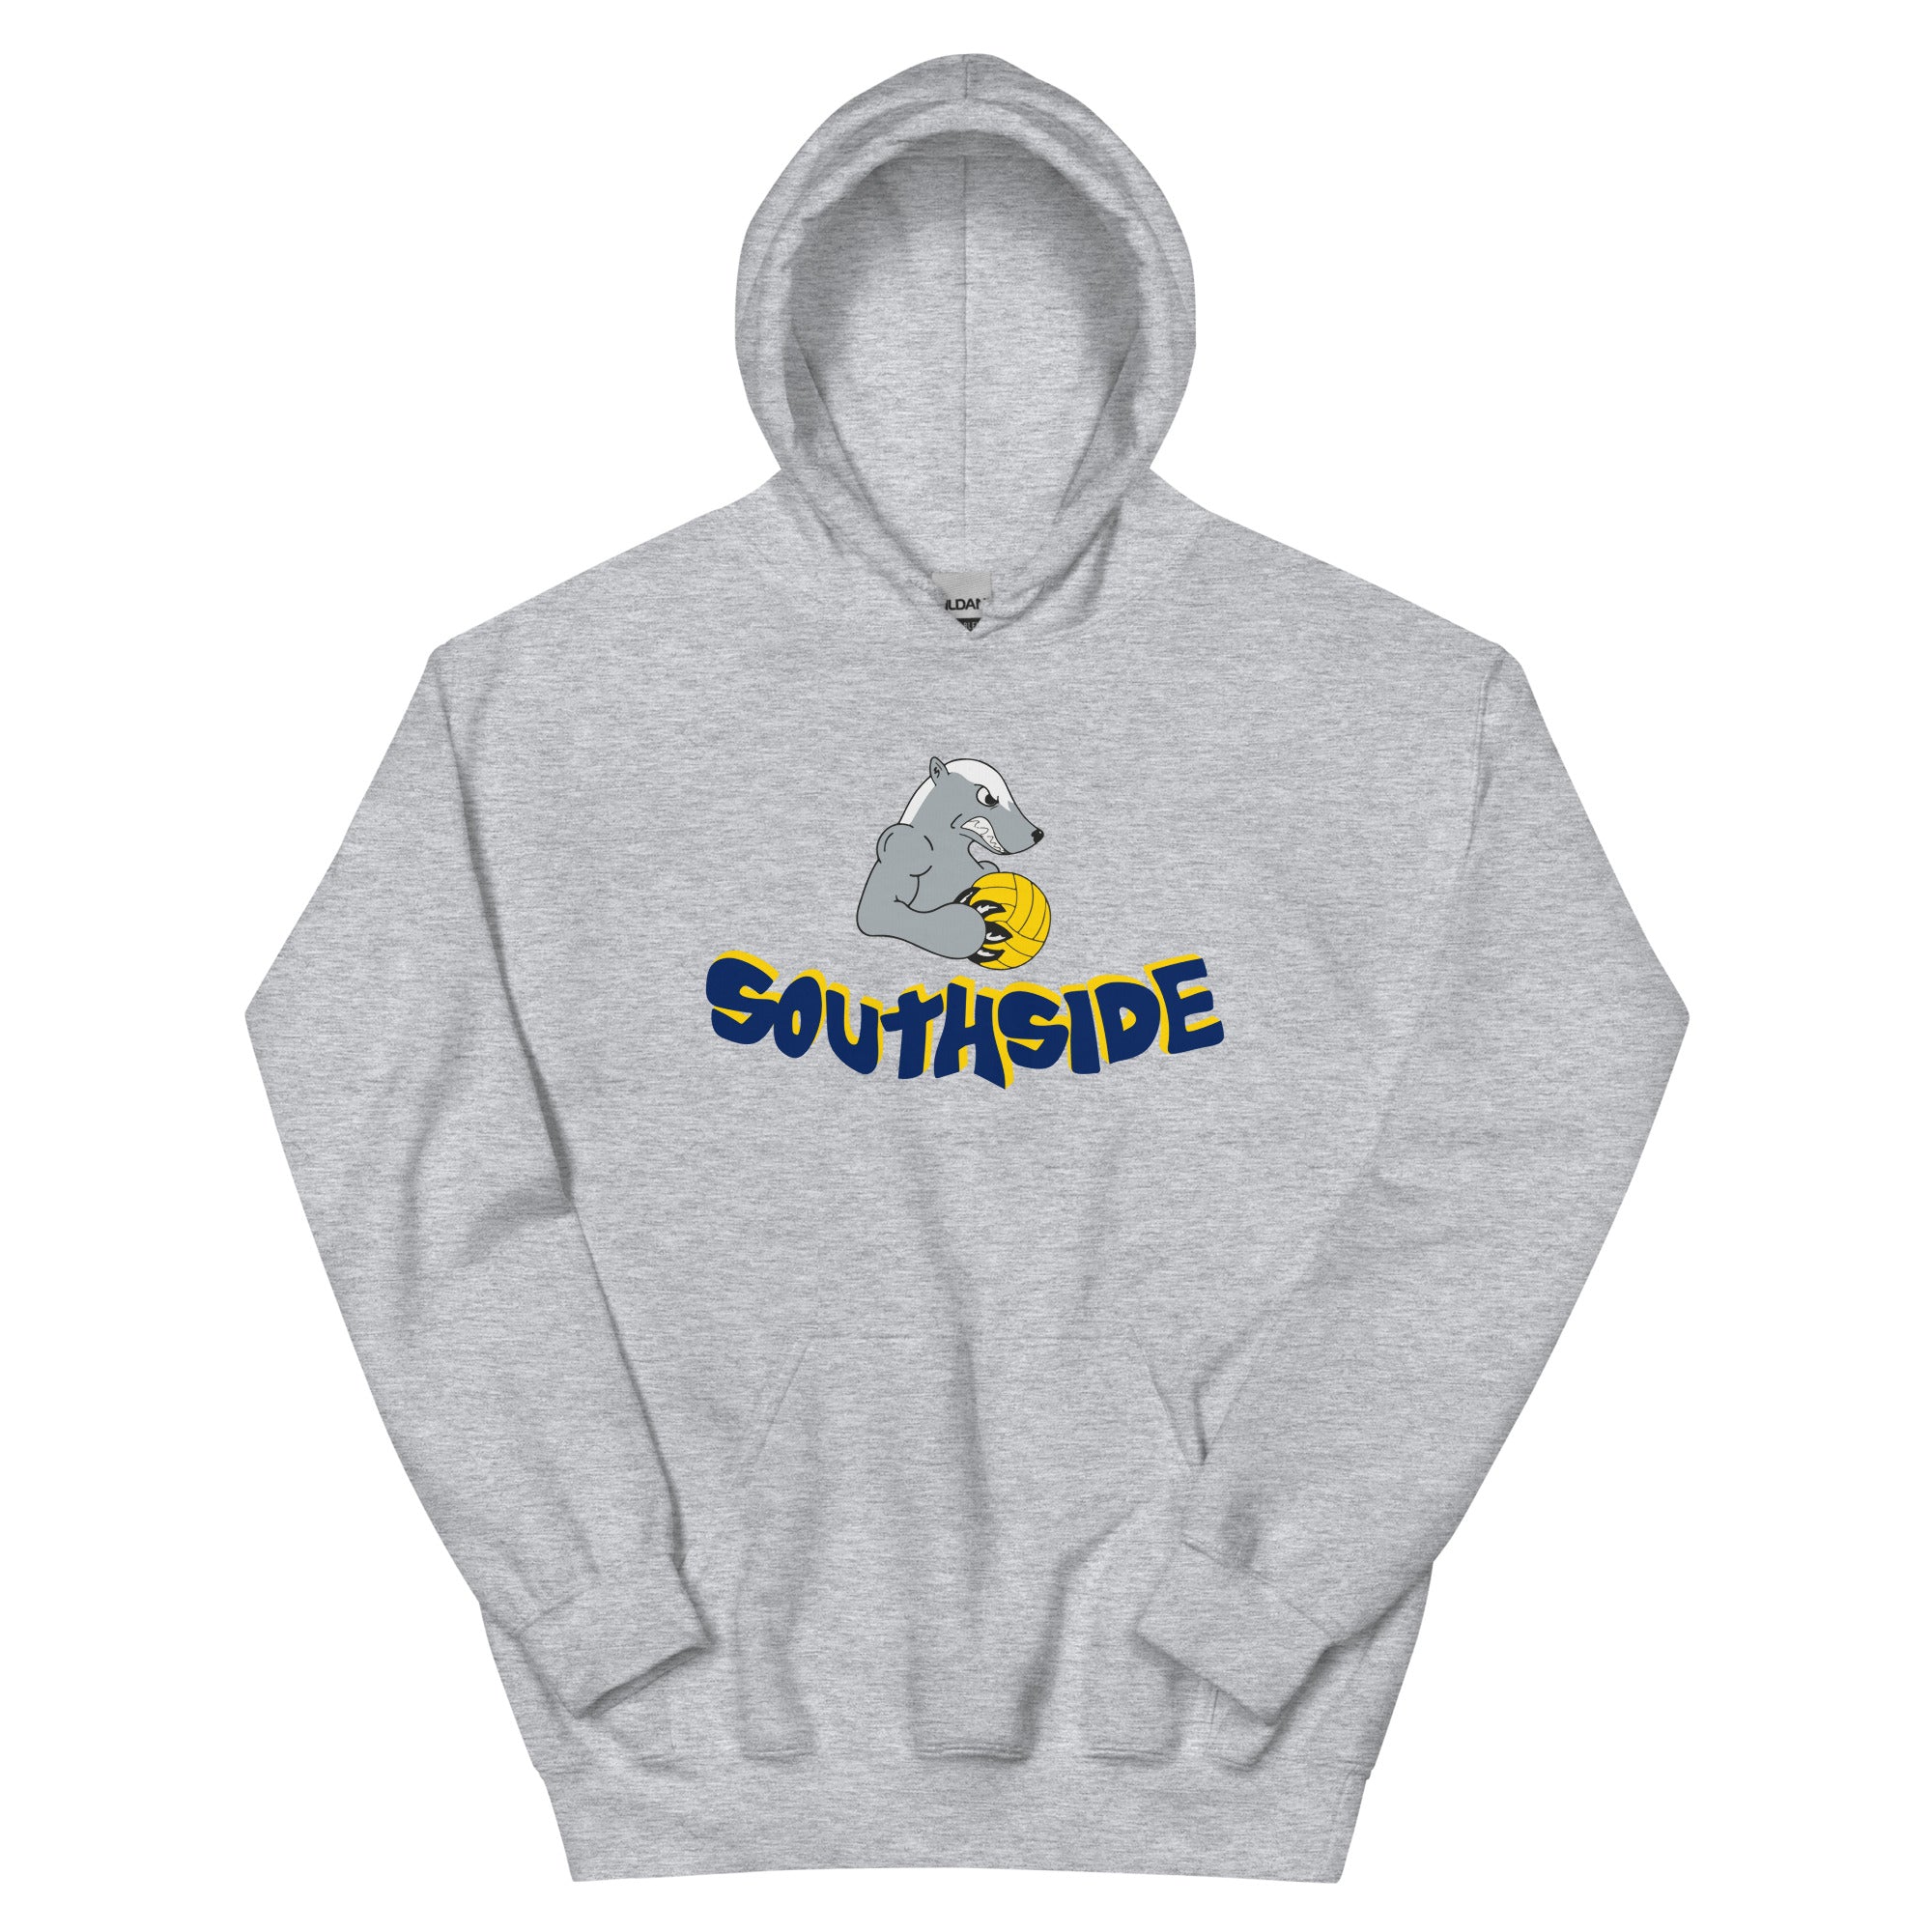 Southside Unisex Hoodie Gray